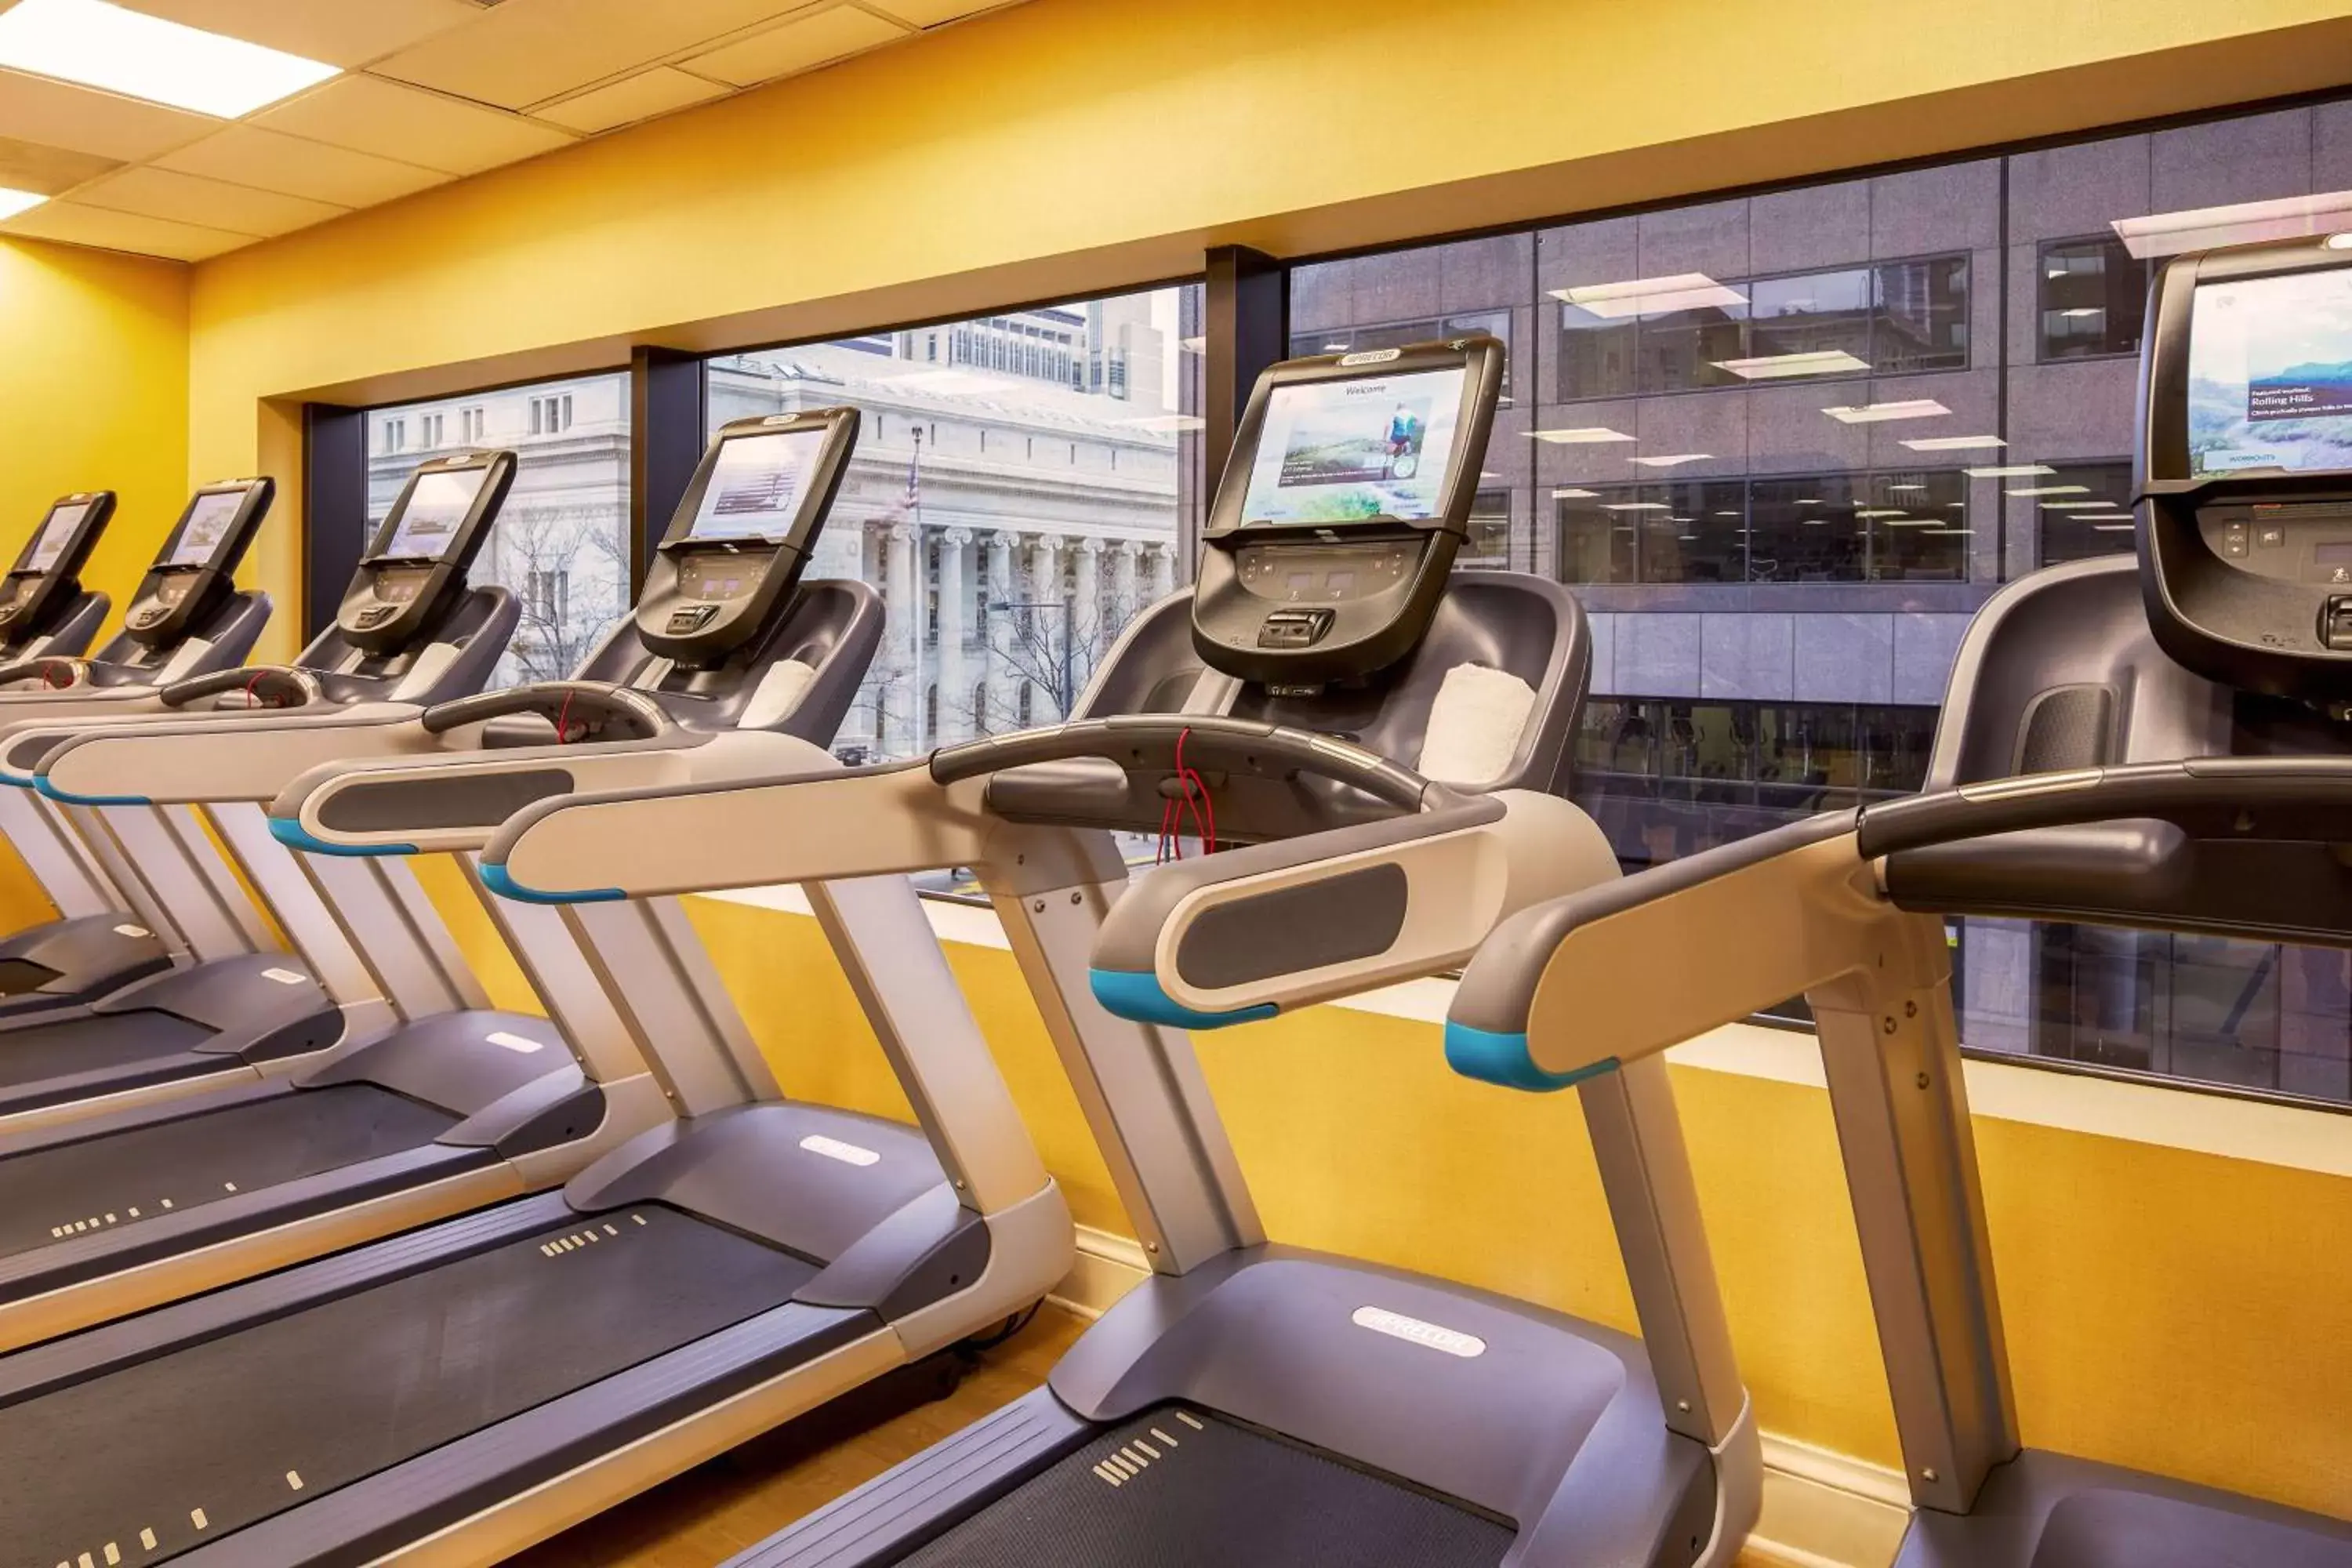 Fitness centre/facilities, Fitness Center/Facilities in Hilton Denver City Center